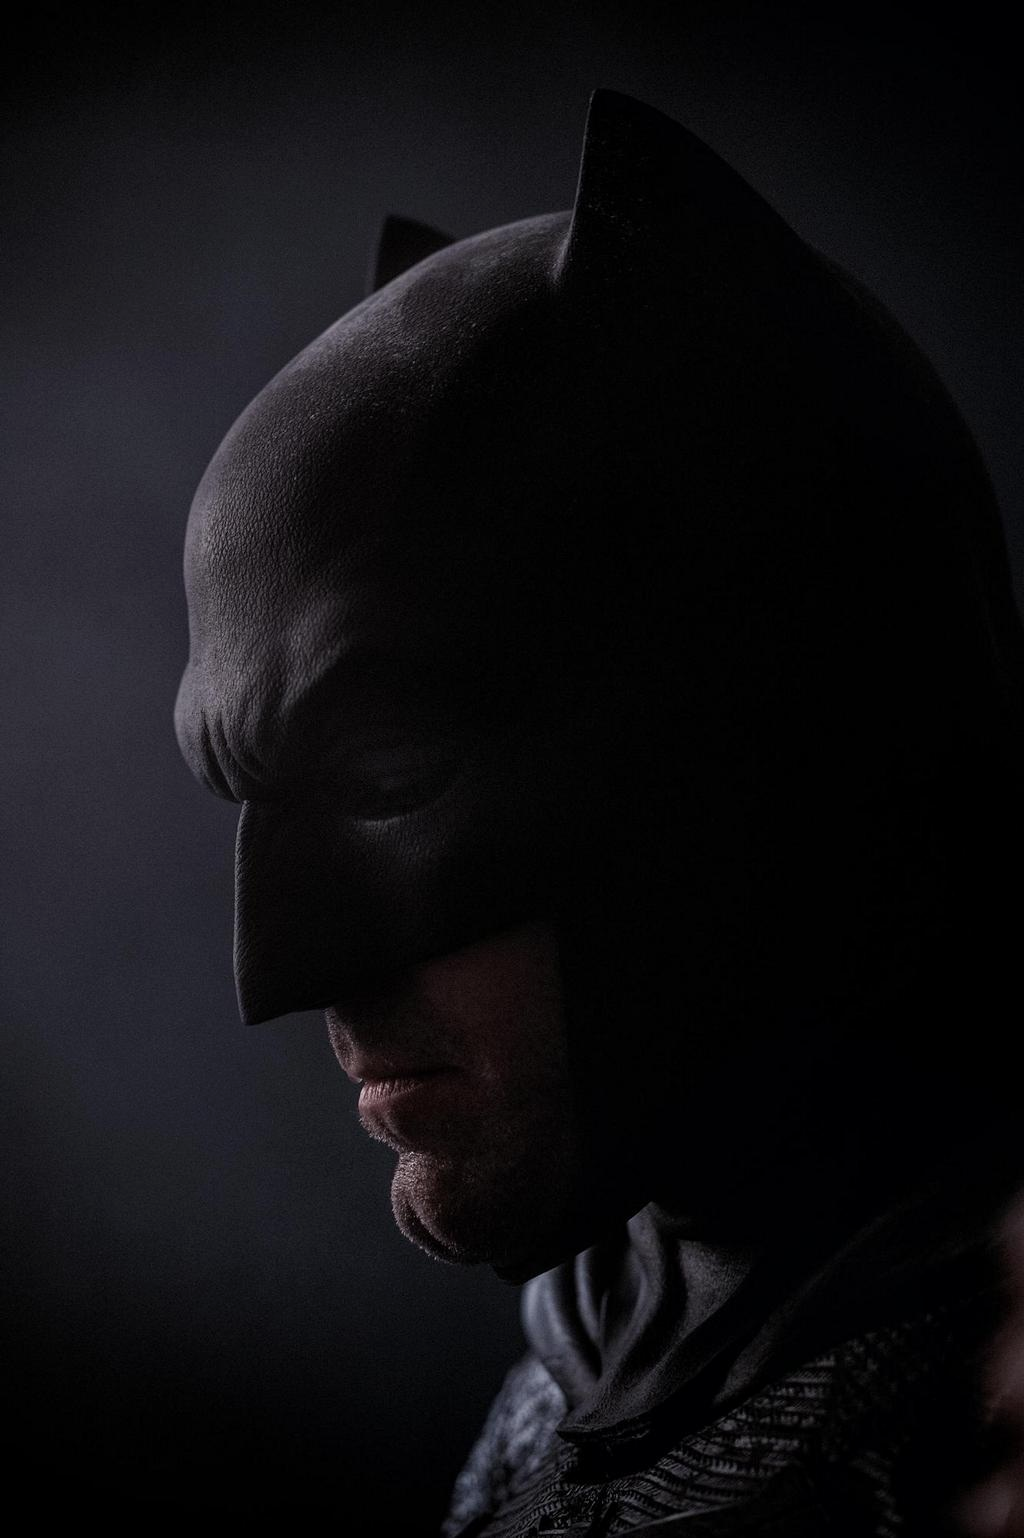 Batman looks somber in latest photo